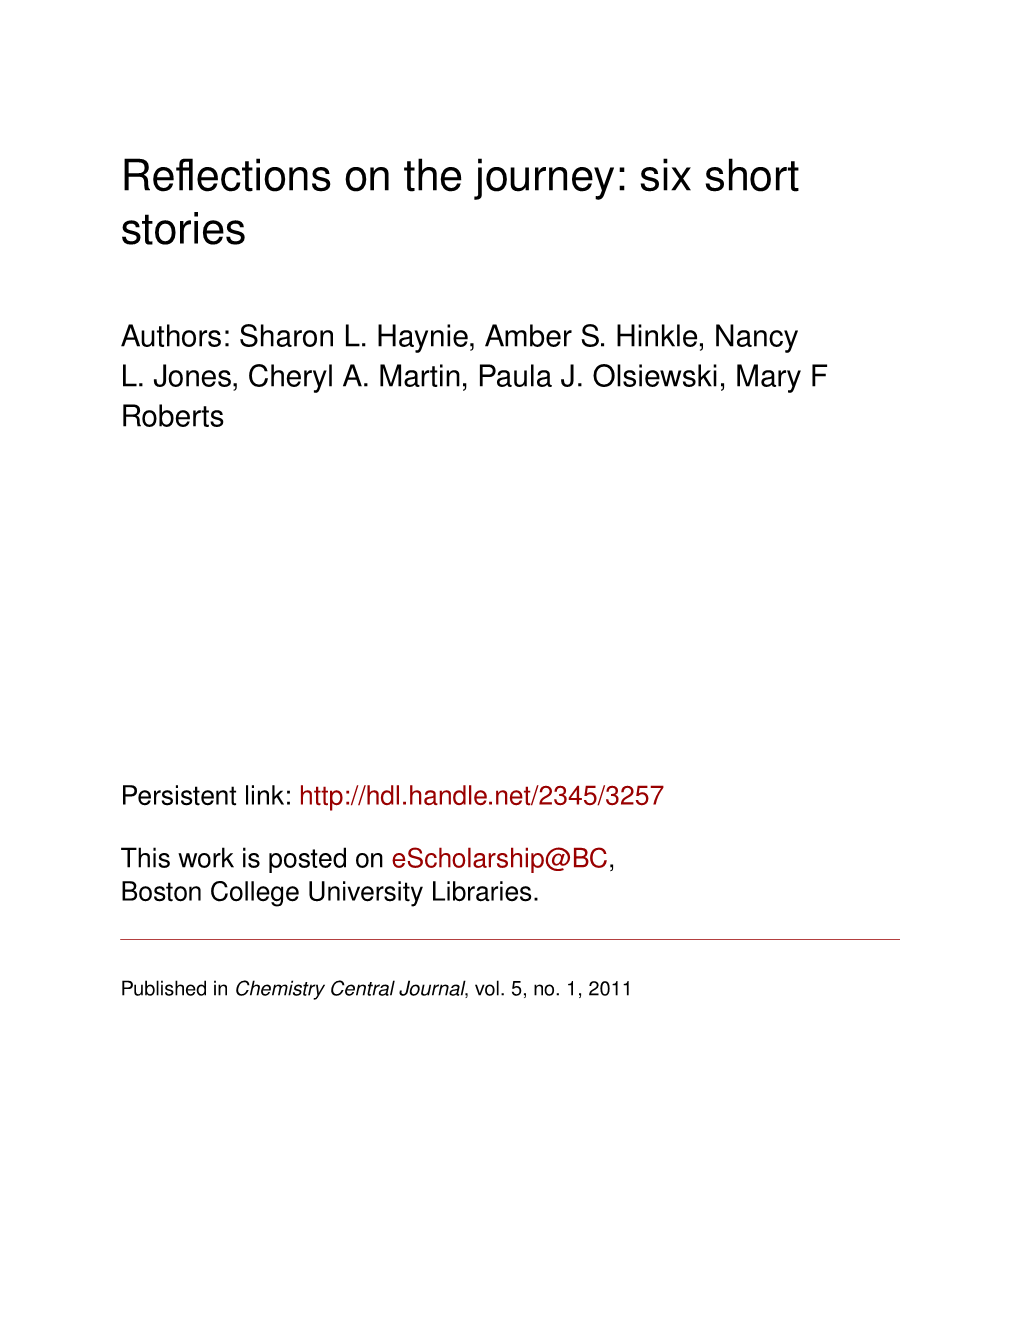 Reflections on the Journey: Six Short Stories Sharon L Haynie1*, Amber S Hinkle2, Nancy L Jones3, Cheryl a Martin4, Paula J Olsiewski5 and Mary F Roberts6